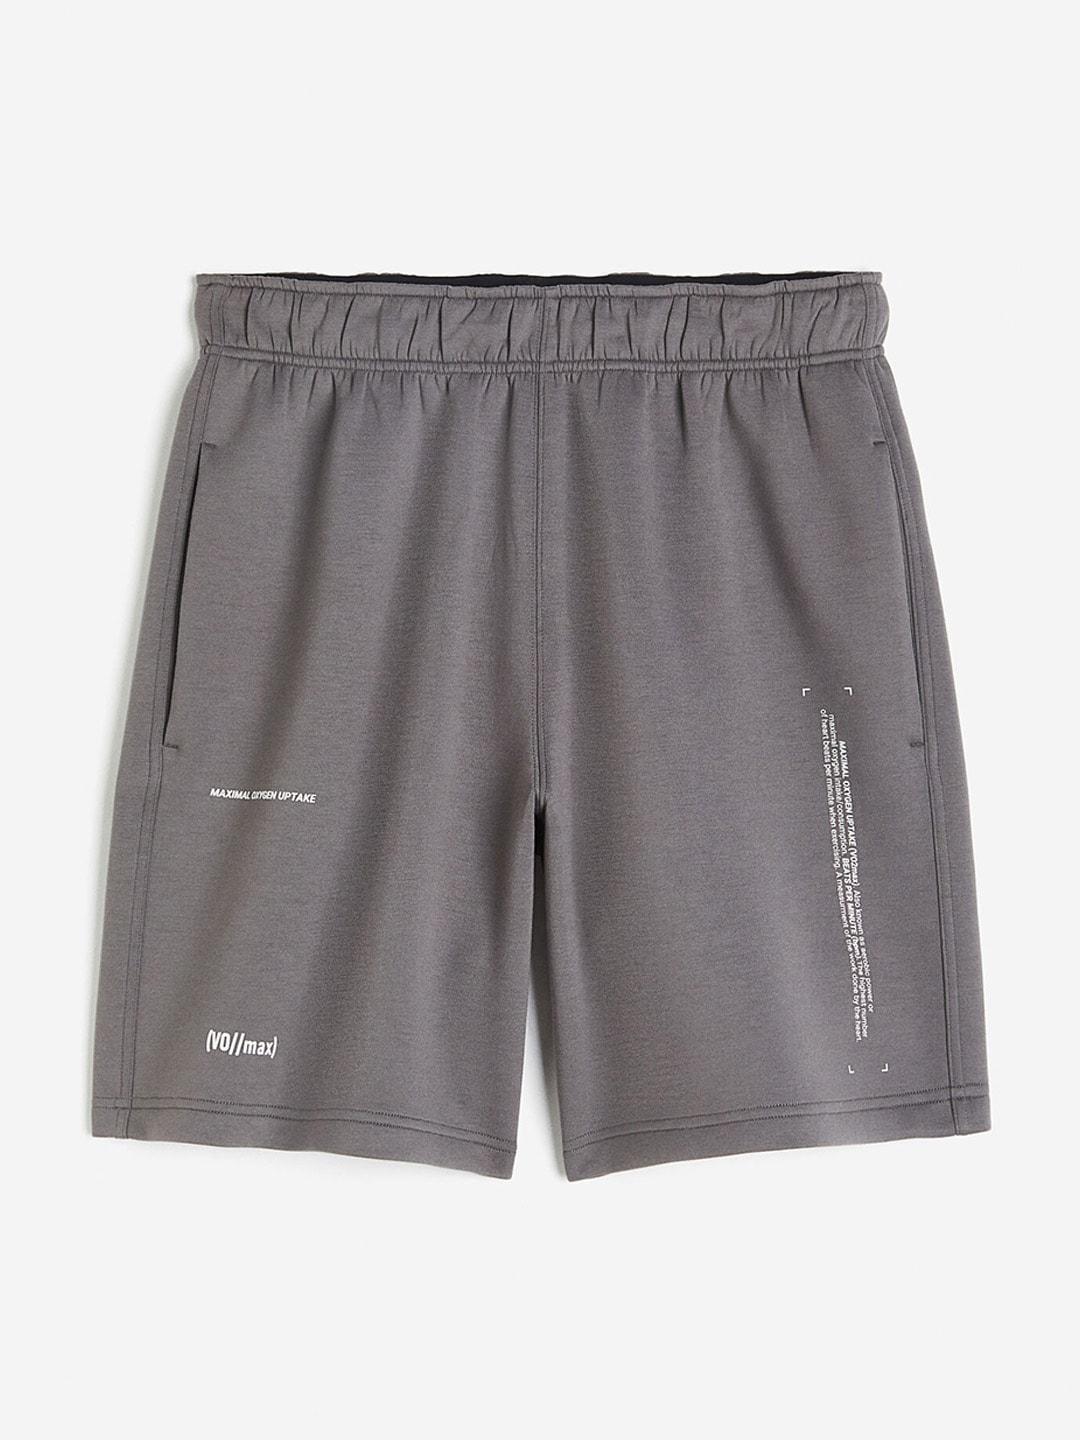 h&m-men-dry-move-sports-shorts